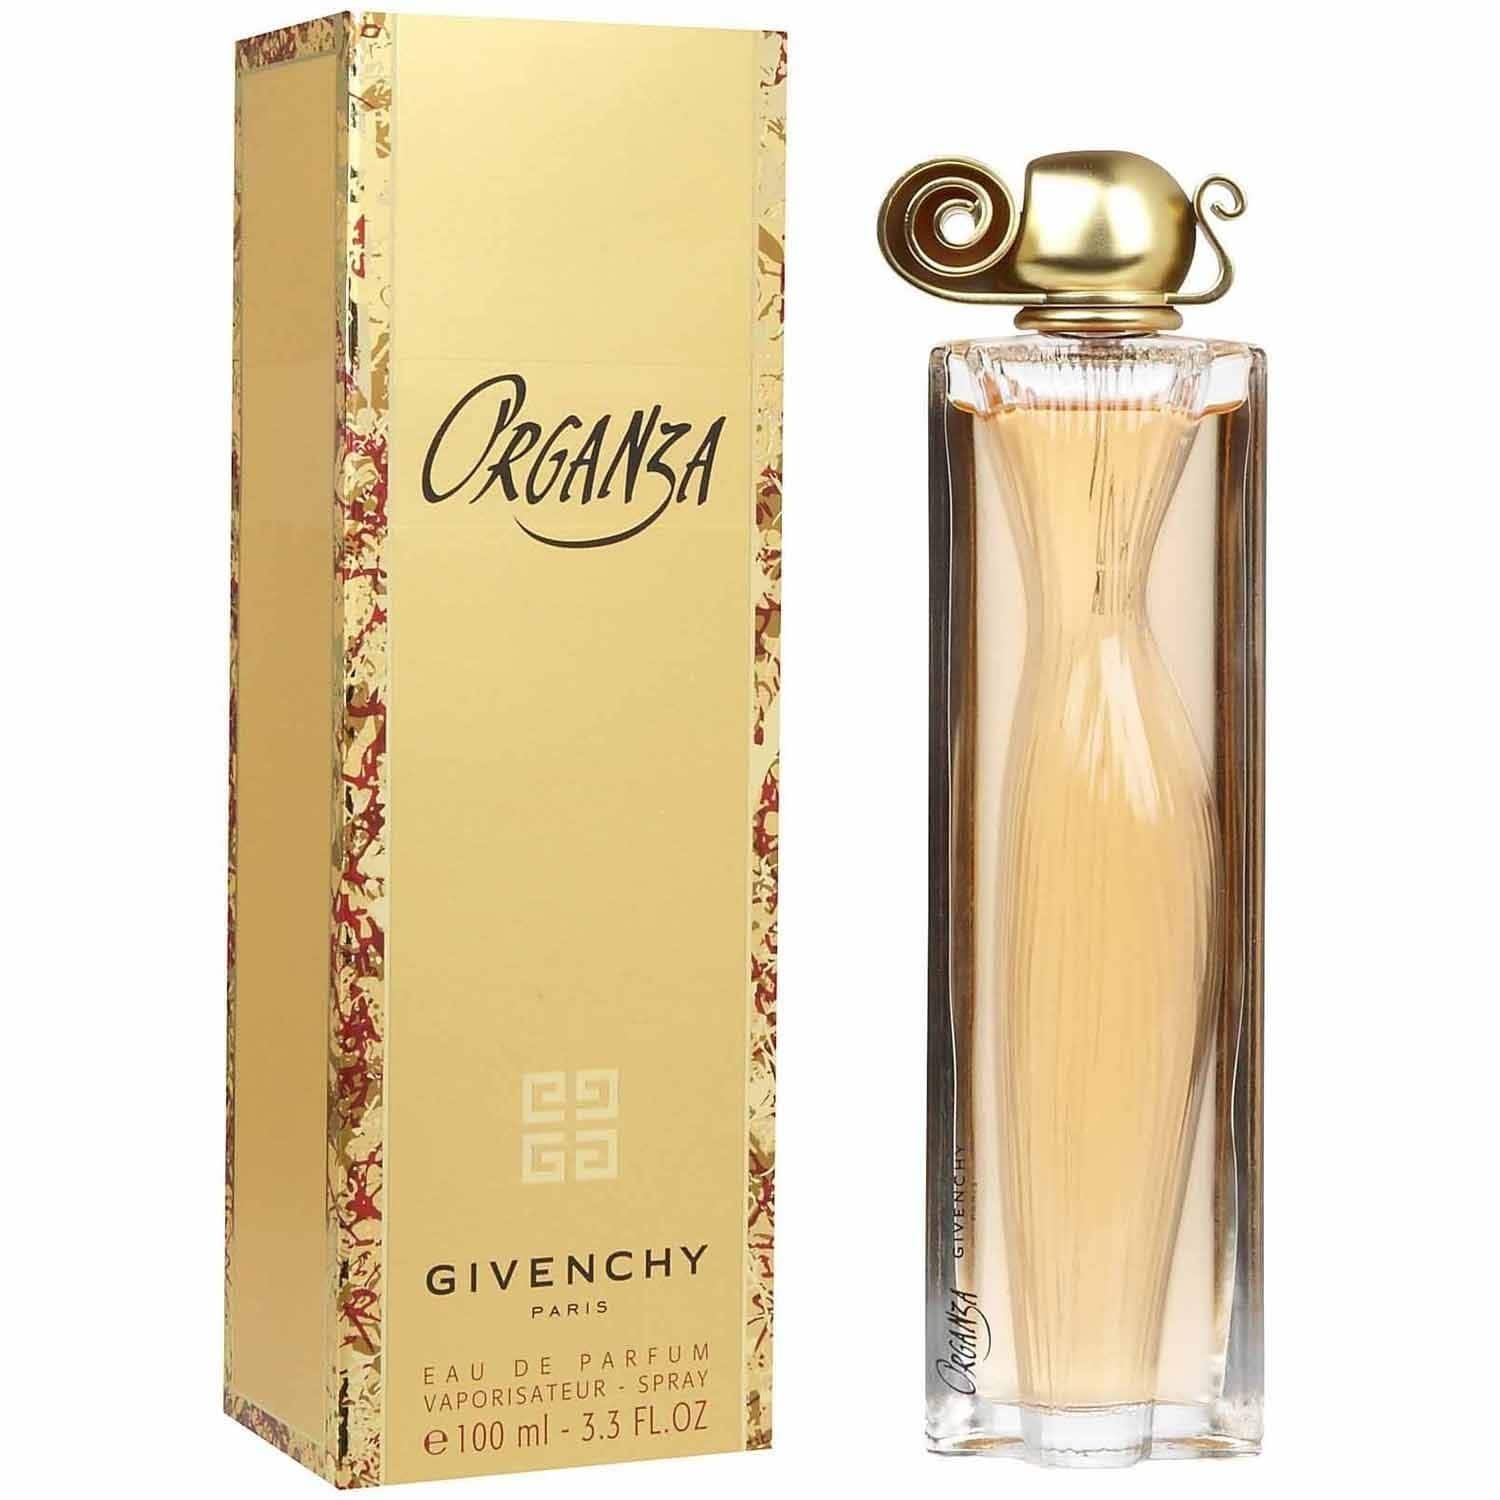 Givenchy Organza Eau de Parfum, Perfume for Women, 3.3 Oz - image 2 of 3